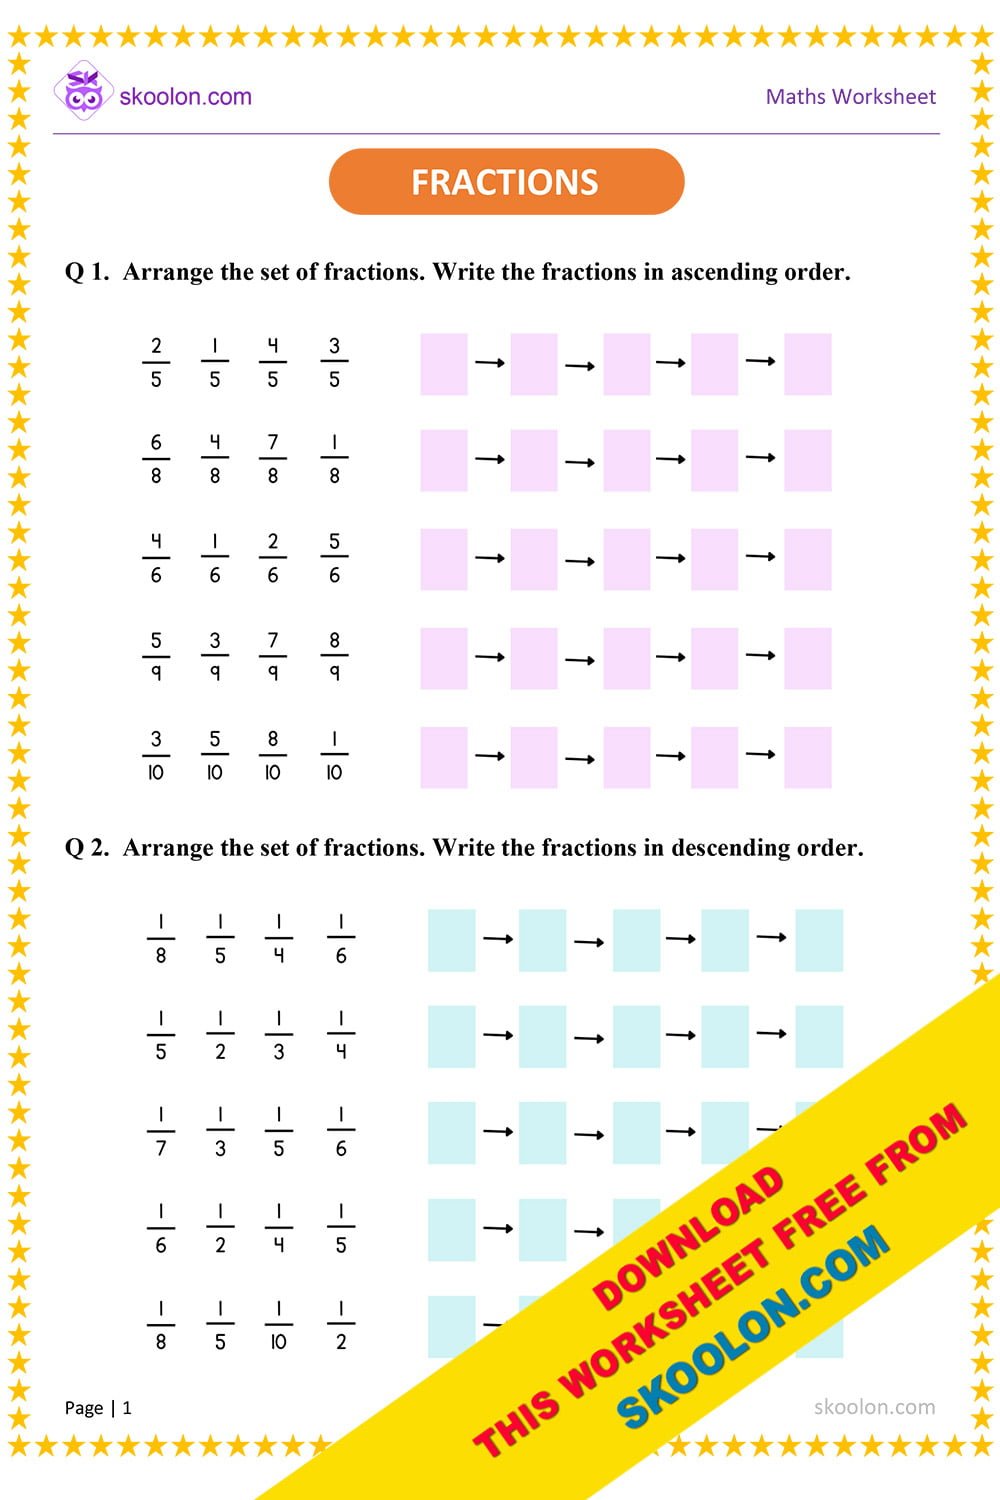 Math Fraction Worksheet-4 - skoolon.com